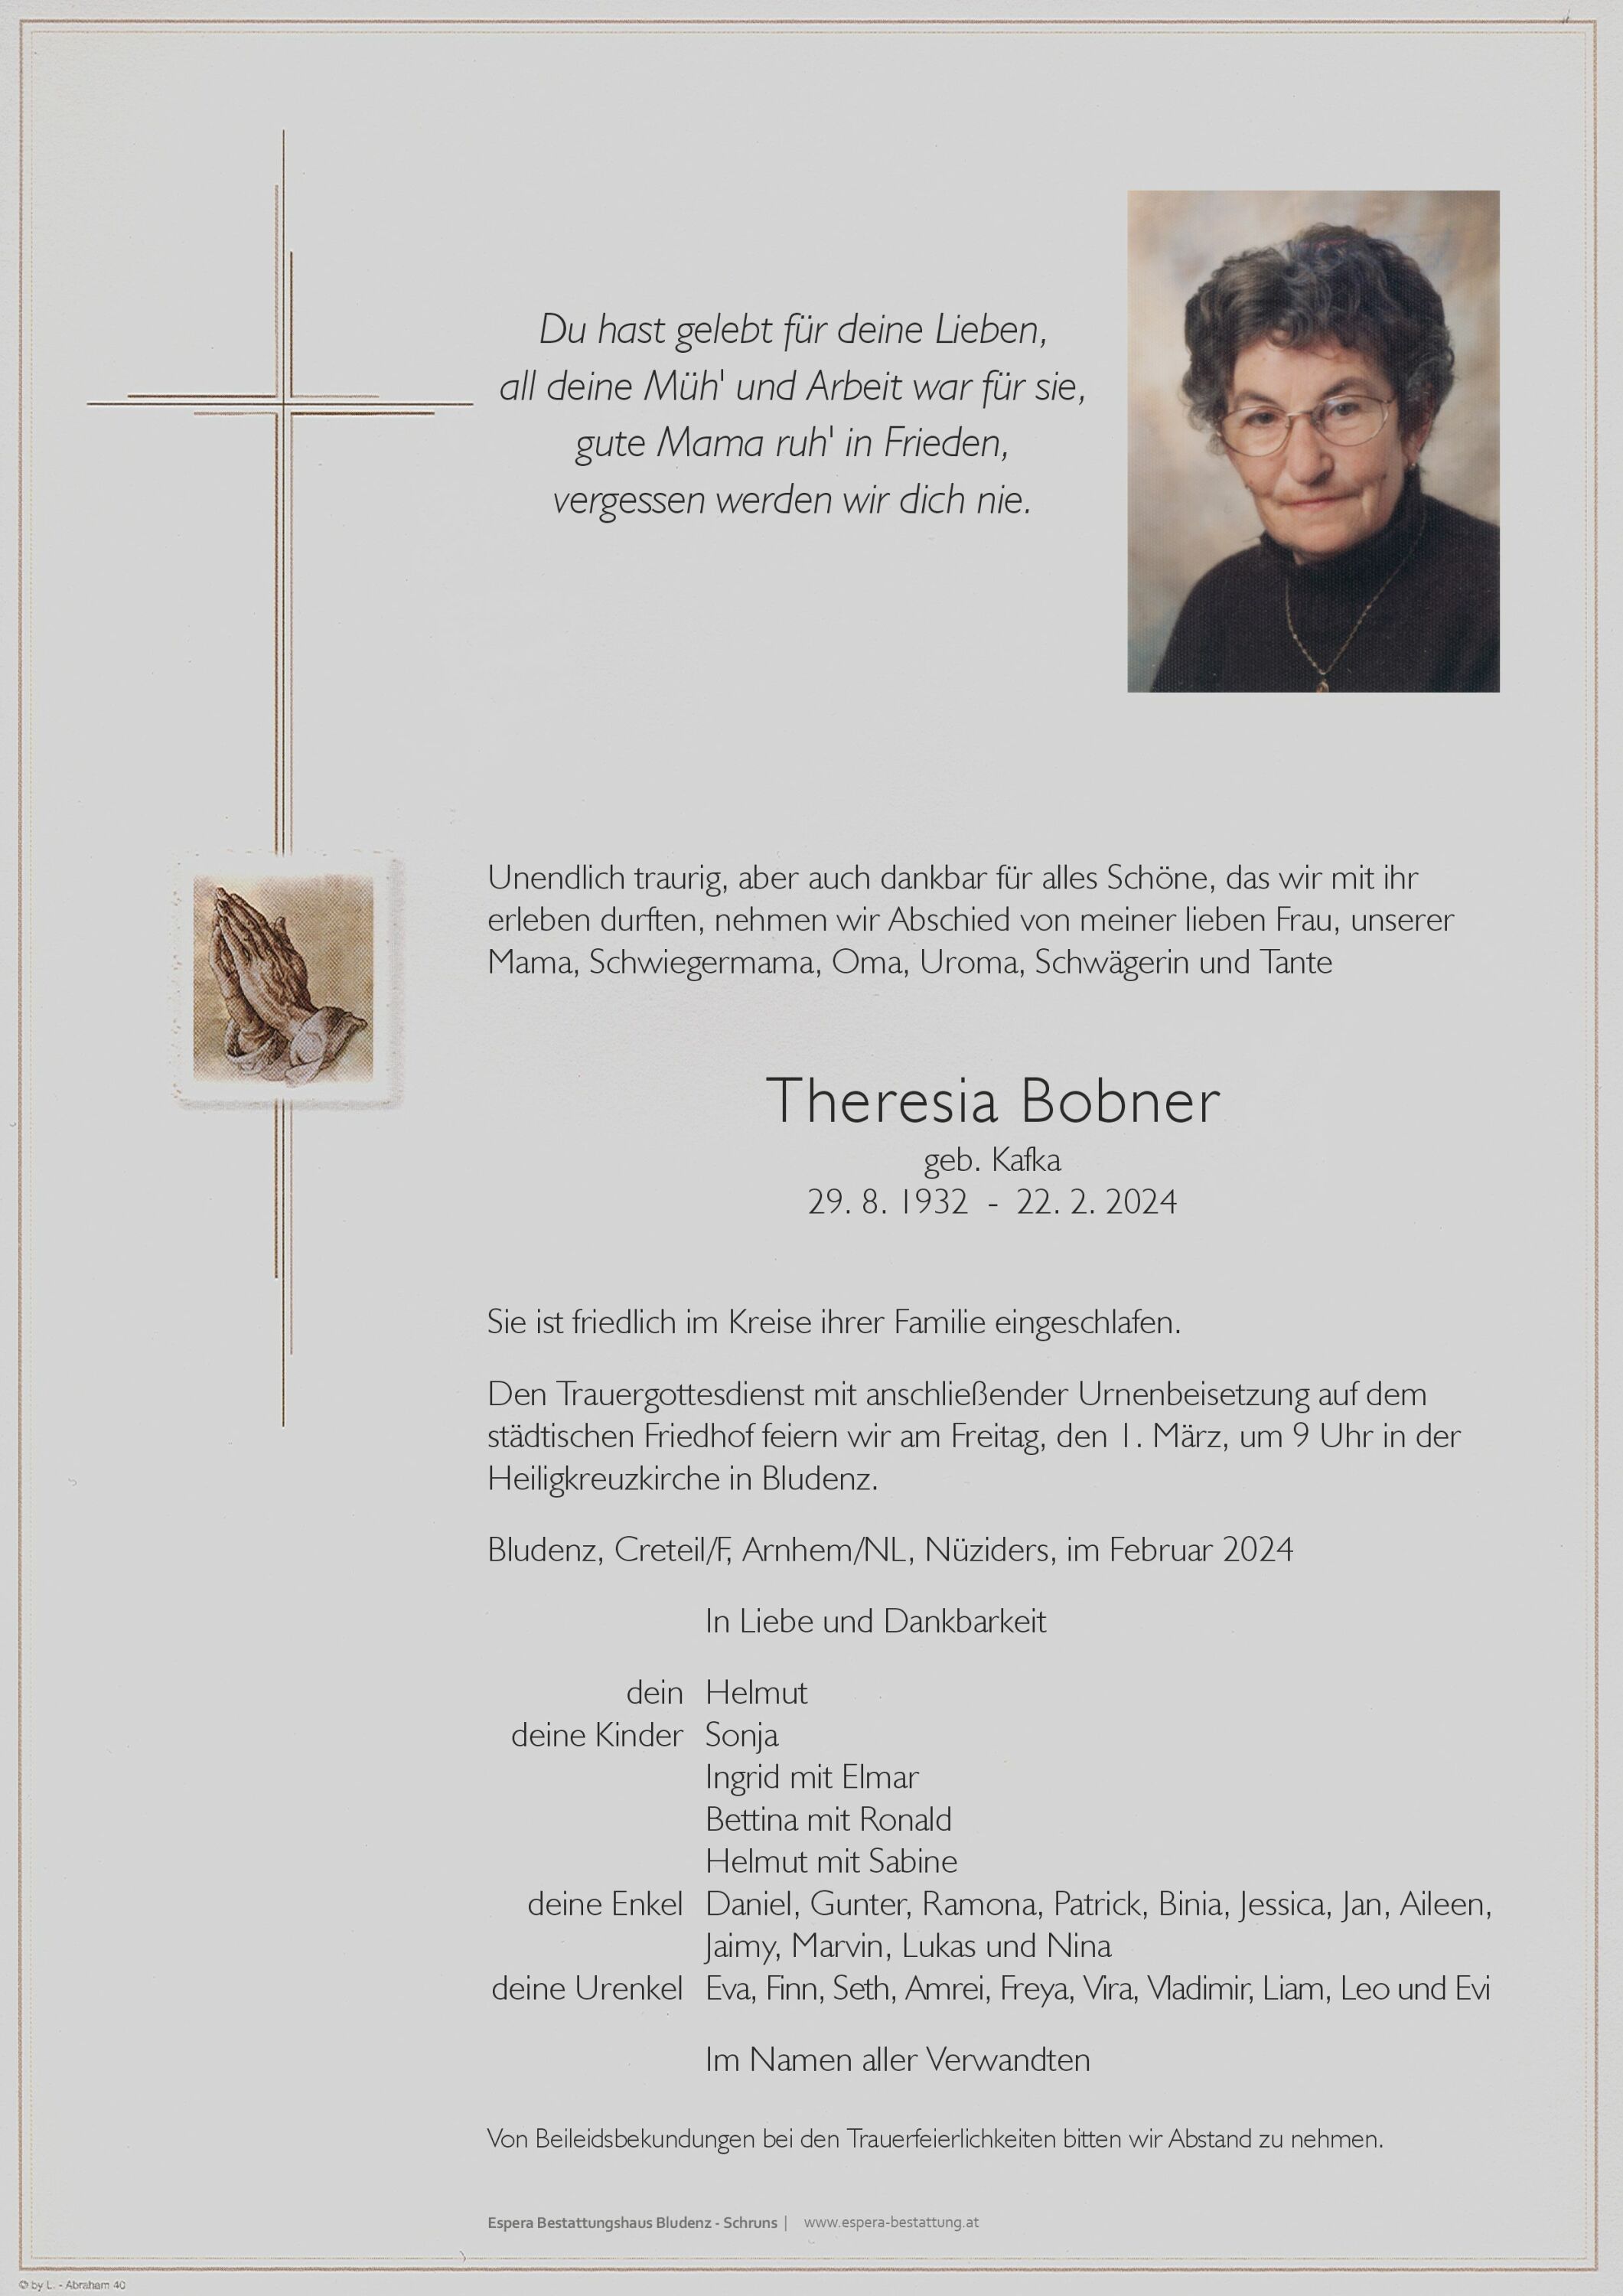 Theresia Bobner